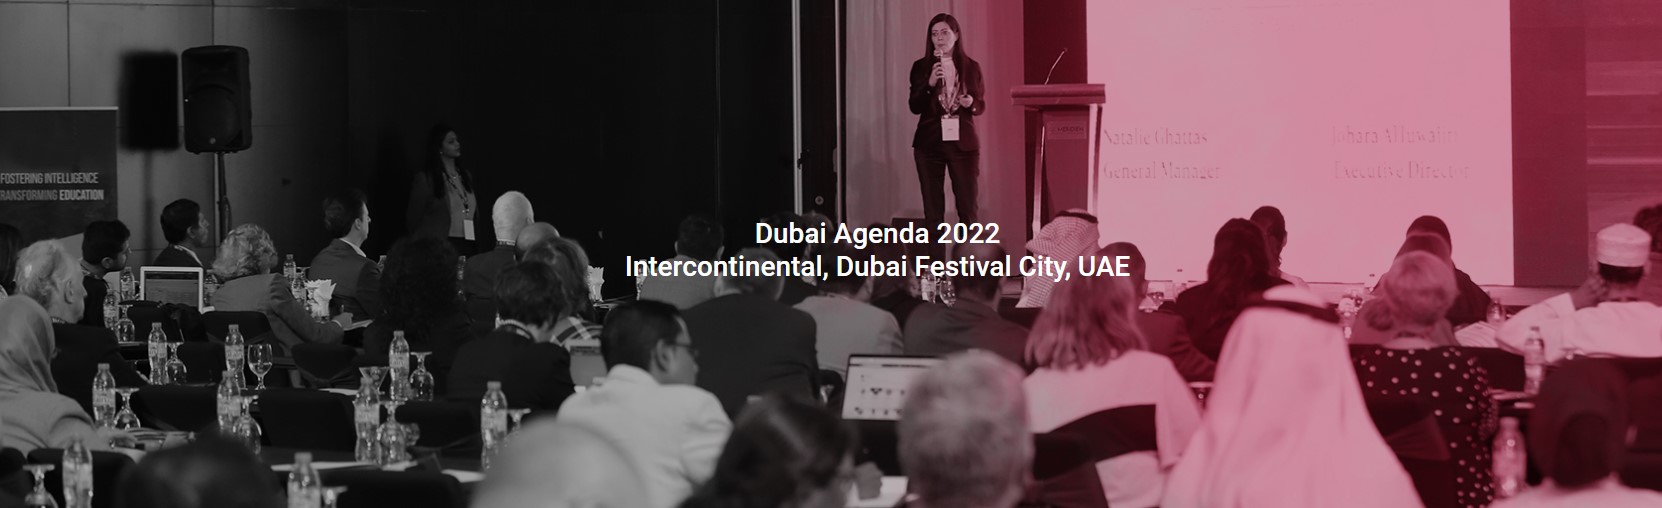 Dubai Agenda 2022 Intercontinental, Dubai Festival City, UAE